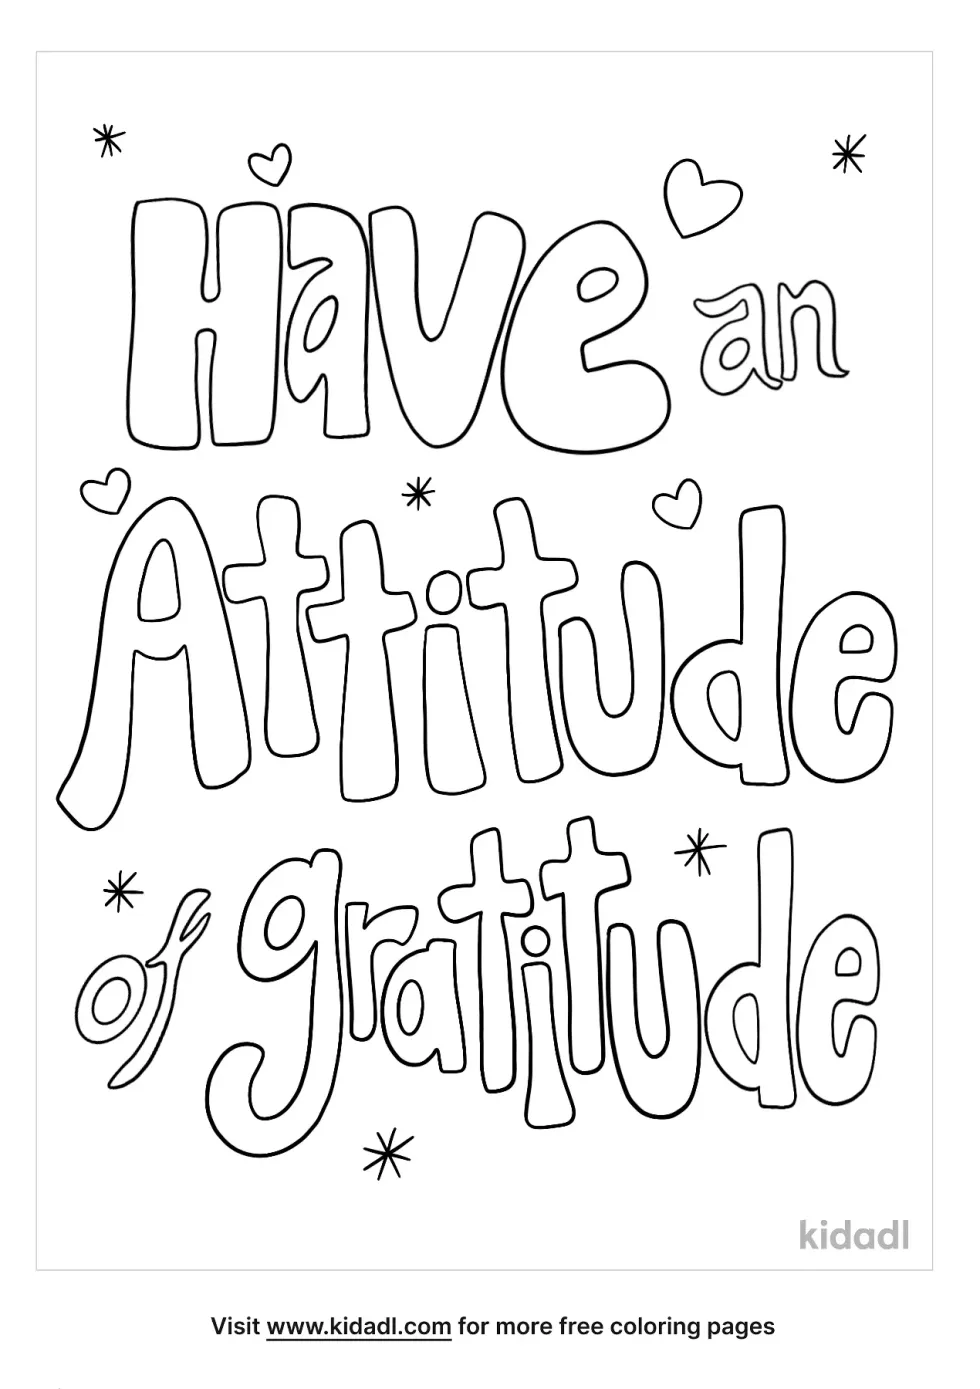 Attitude Of Gratitude Coloring Page